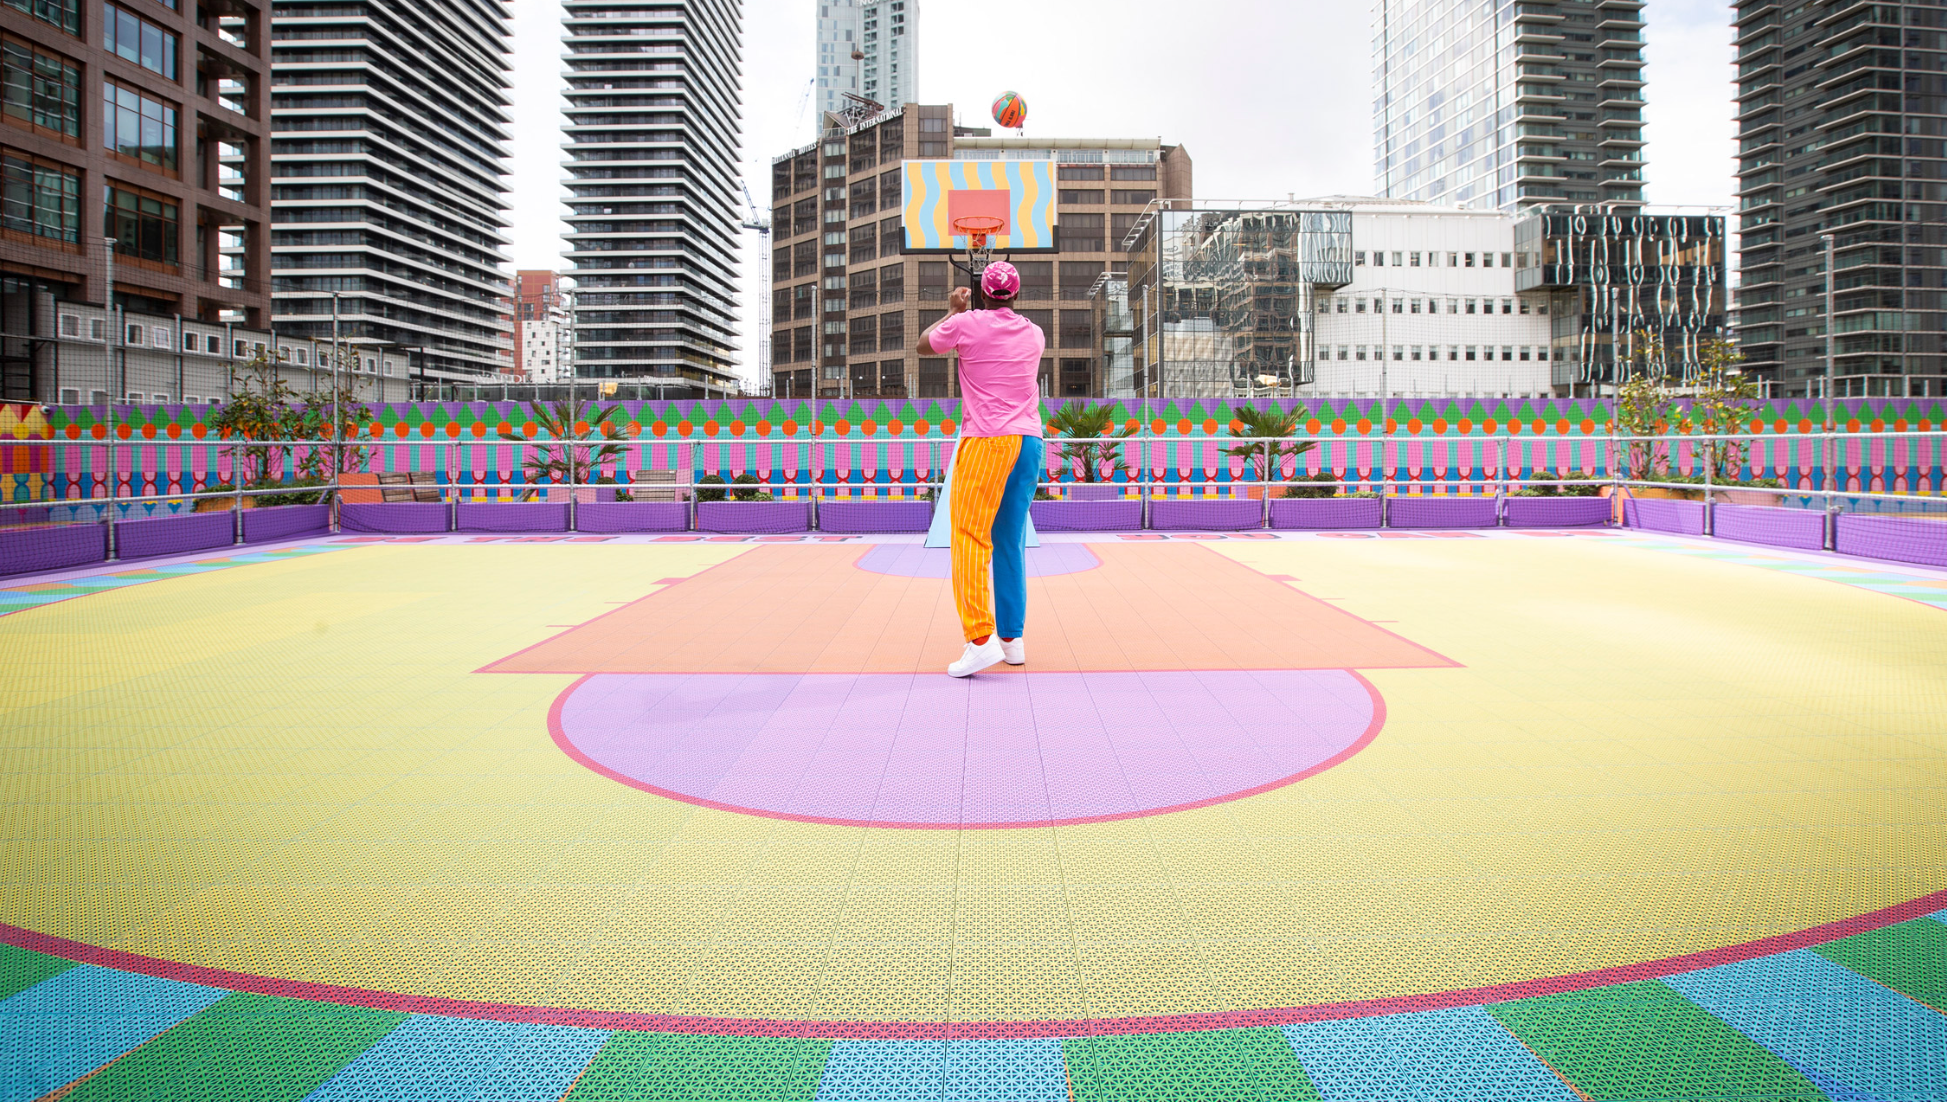 Yinka Ilori's Colourful Basketball Court in London